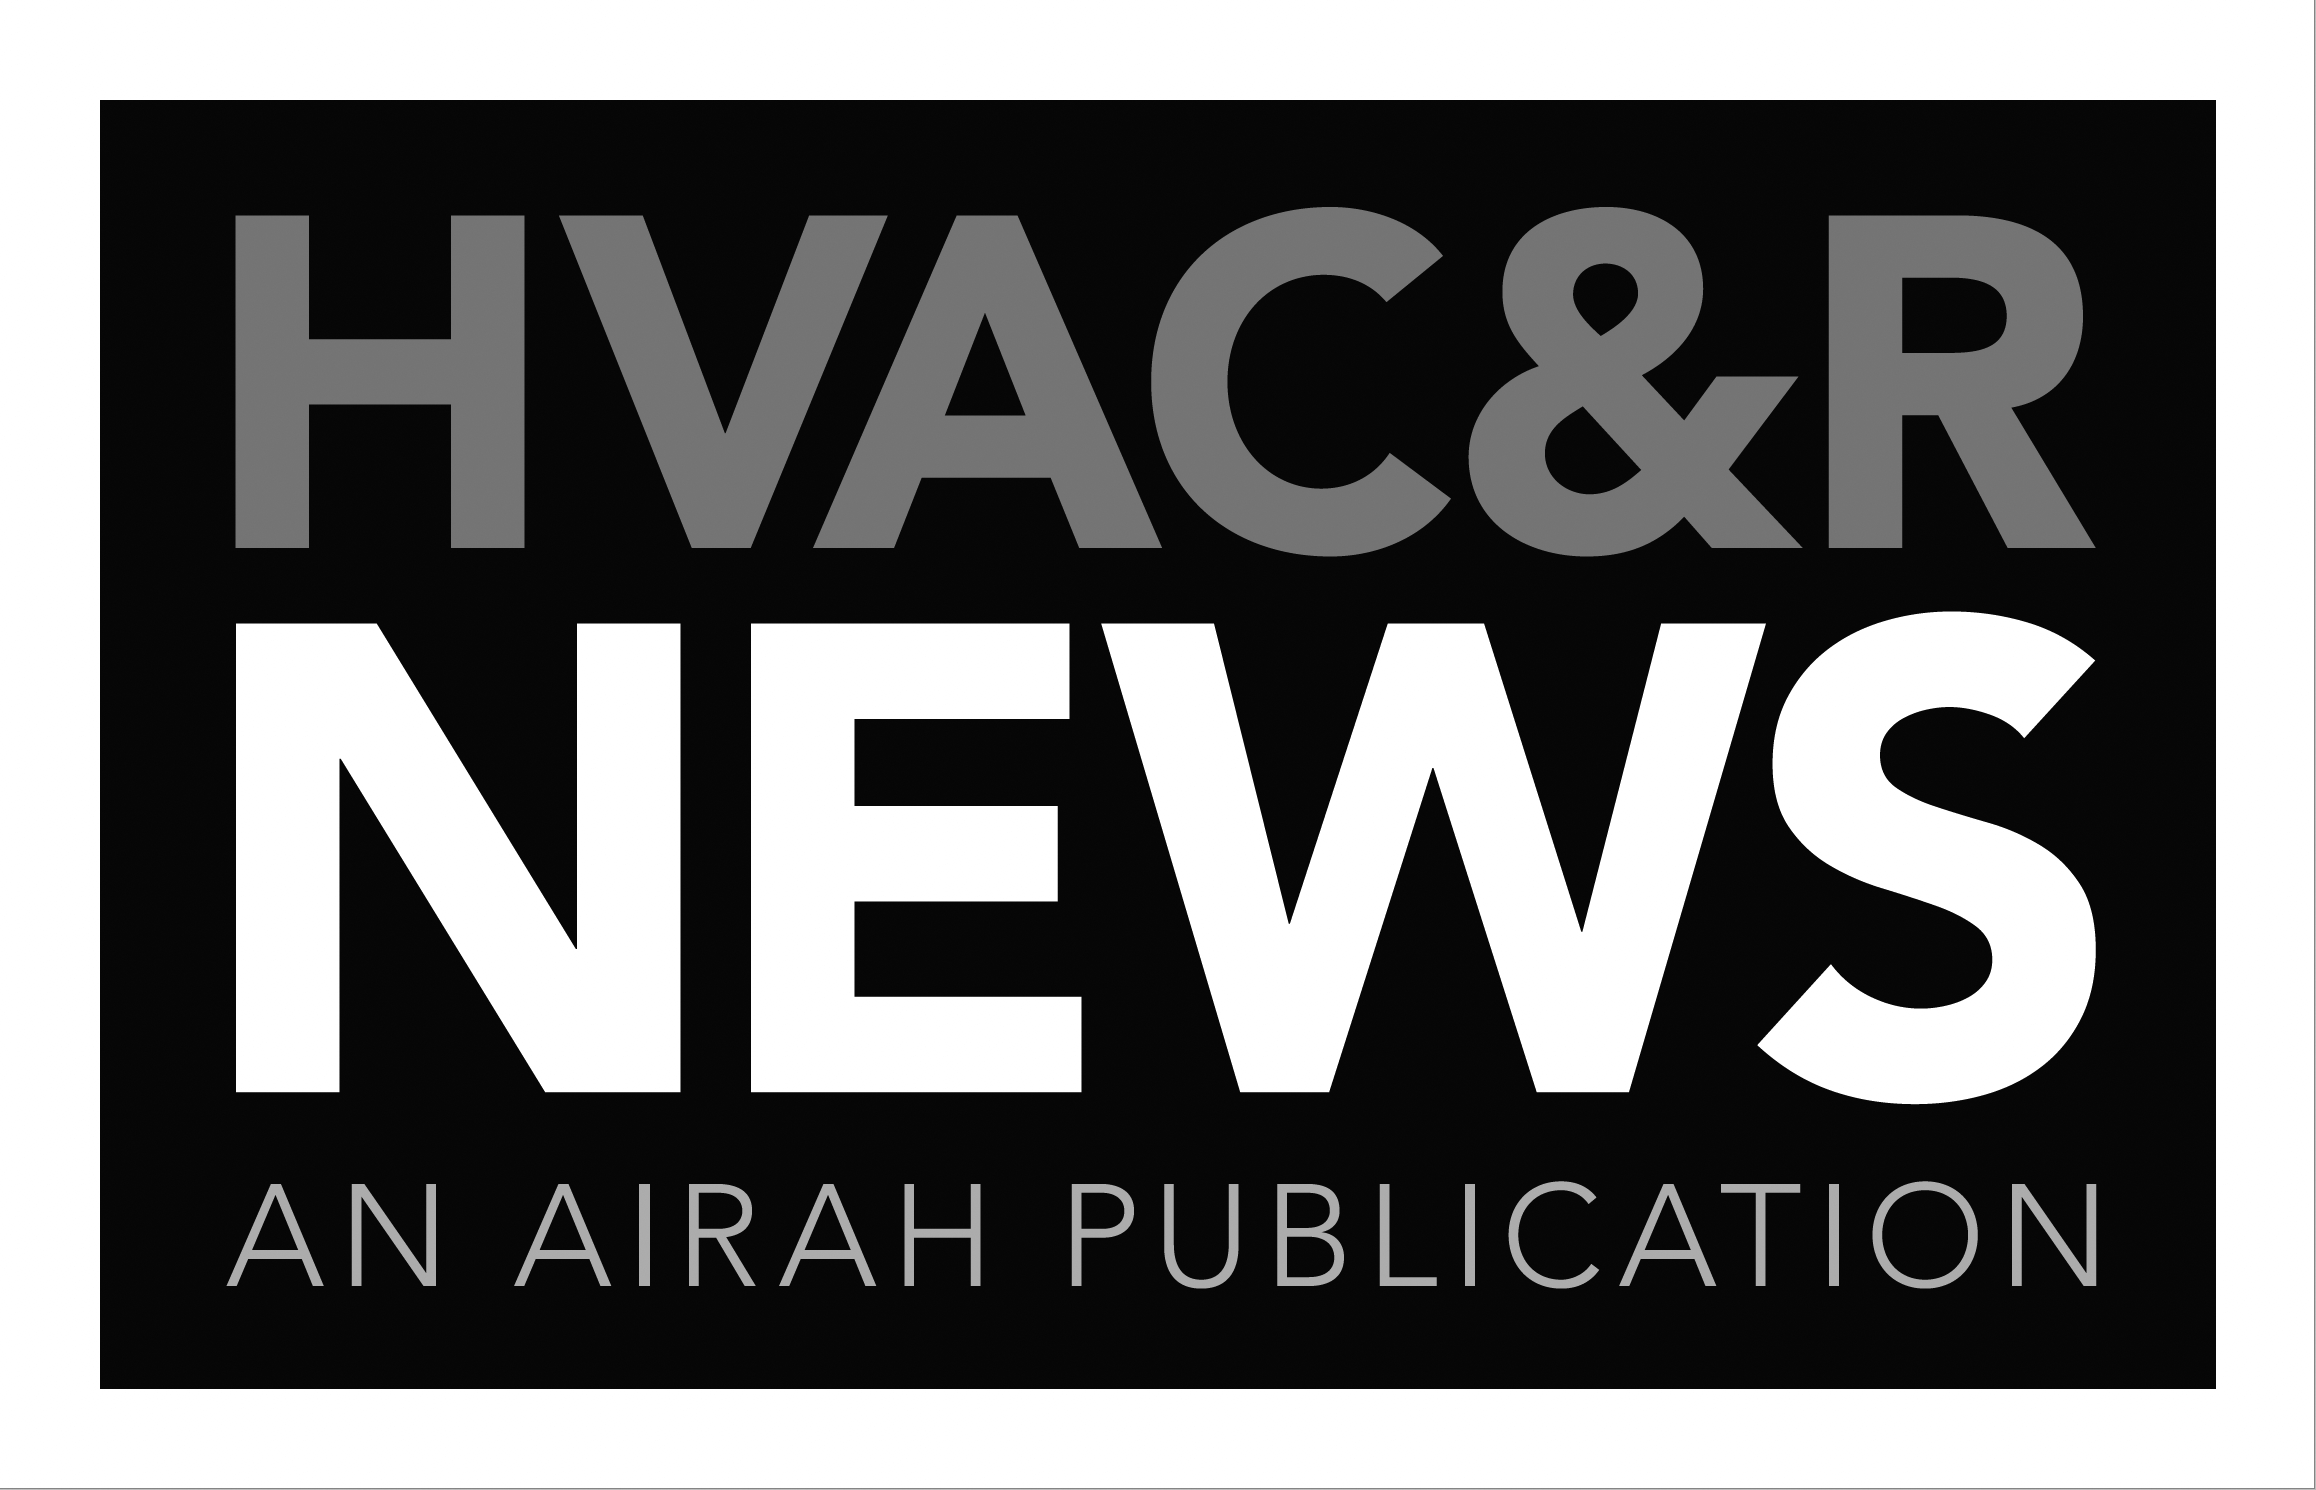 HVAC&R News